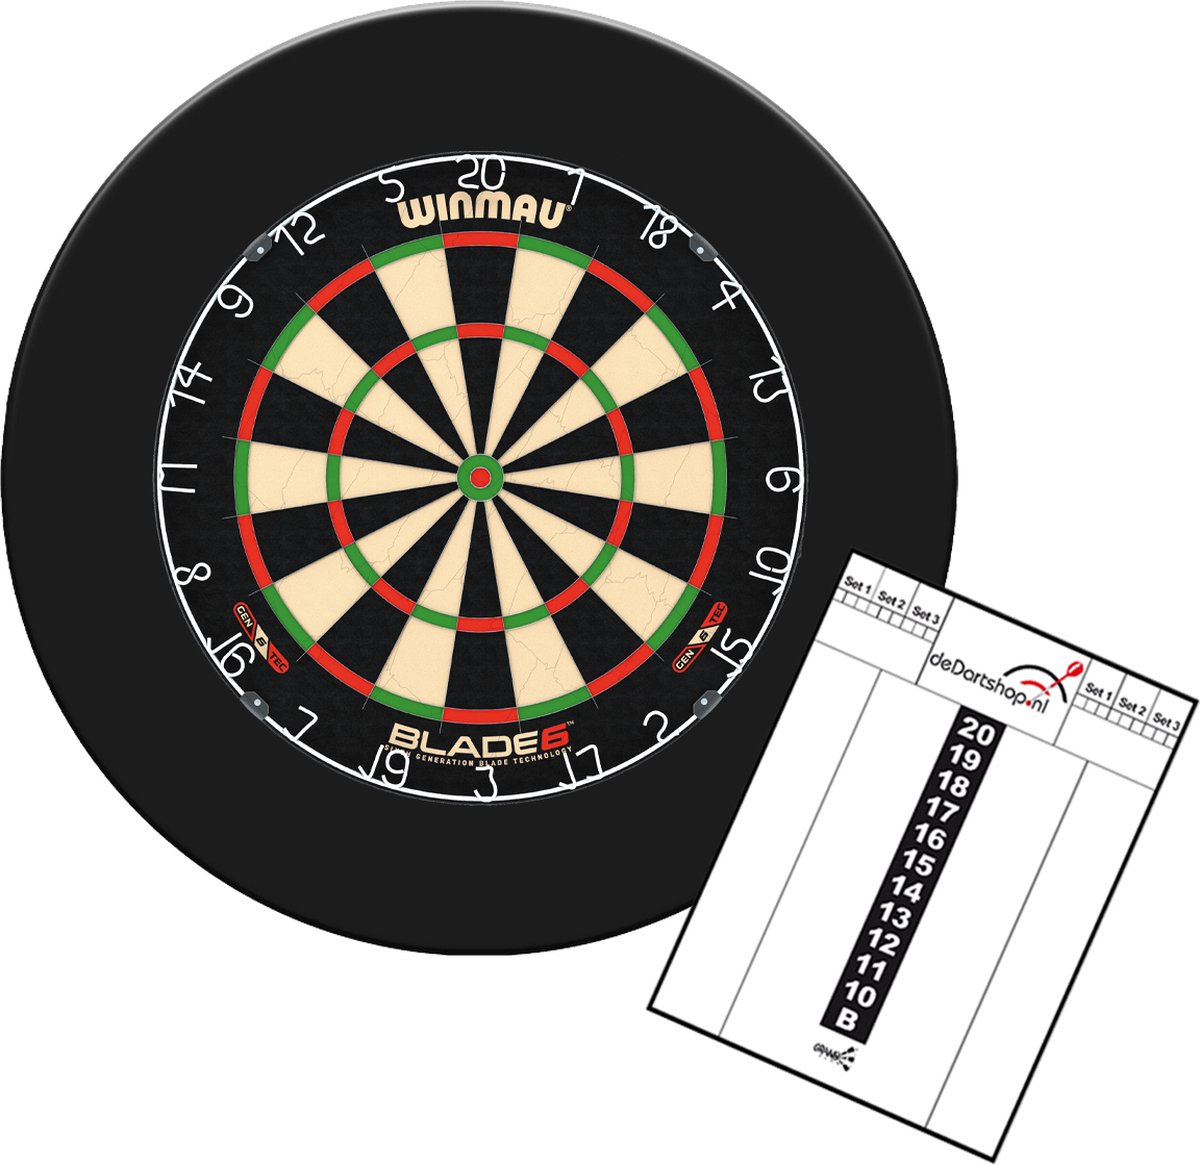 Dragon Darts - Winmau Blade 6 dartbord - Dartbord surround ring - Scorebord - Zwart